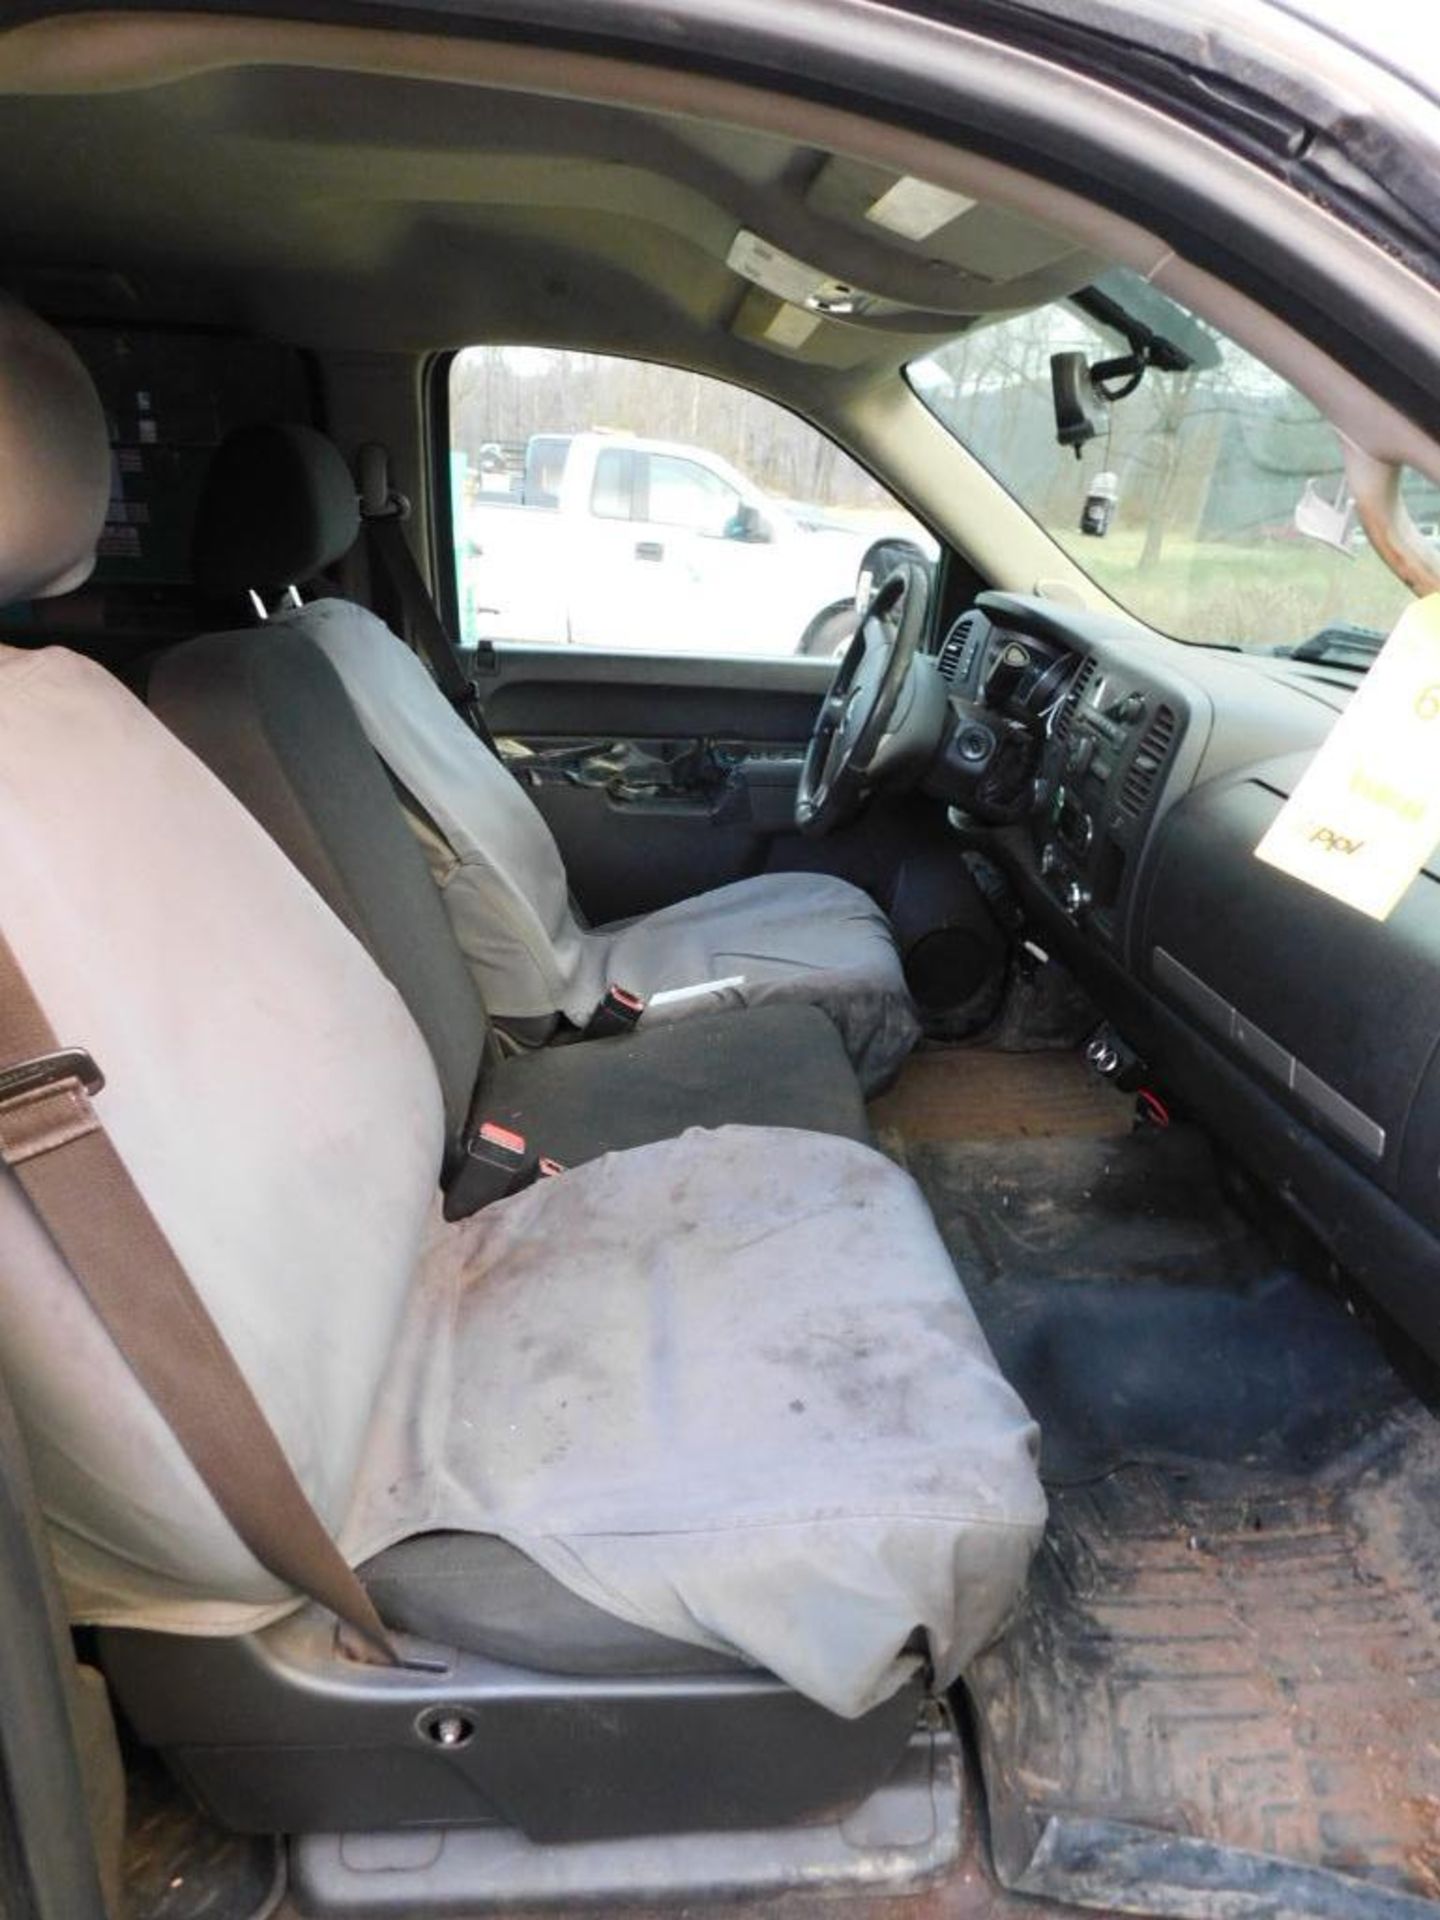 2012 Chevy Silverado Crew Cab, 4-Wheel Drive, 5.3 Liter, V8 Gasoline Motor, Auto, 5'8" Bed w/Toolbox - Image 10 of 13